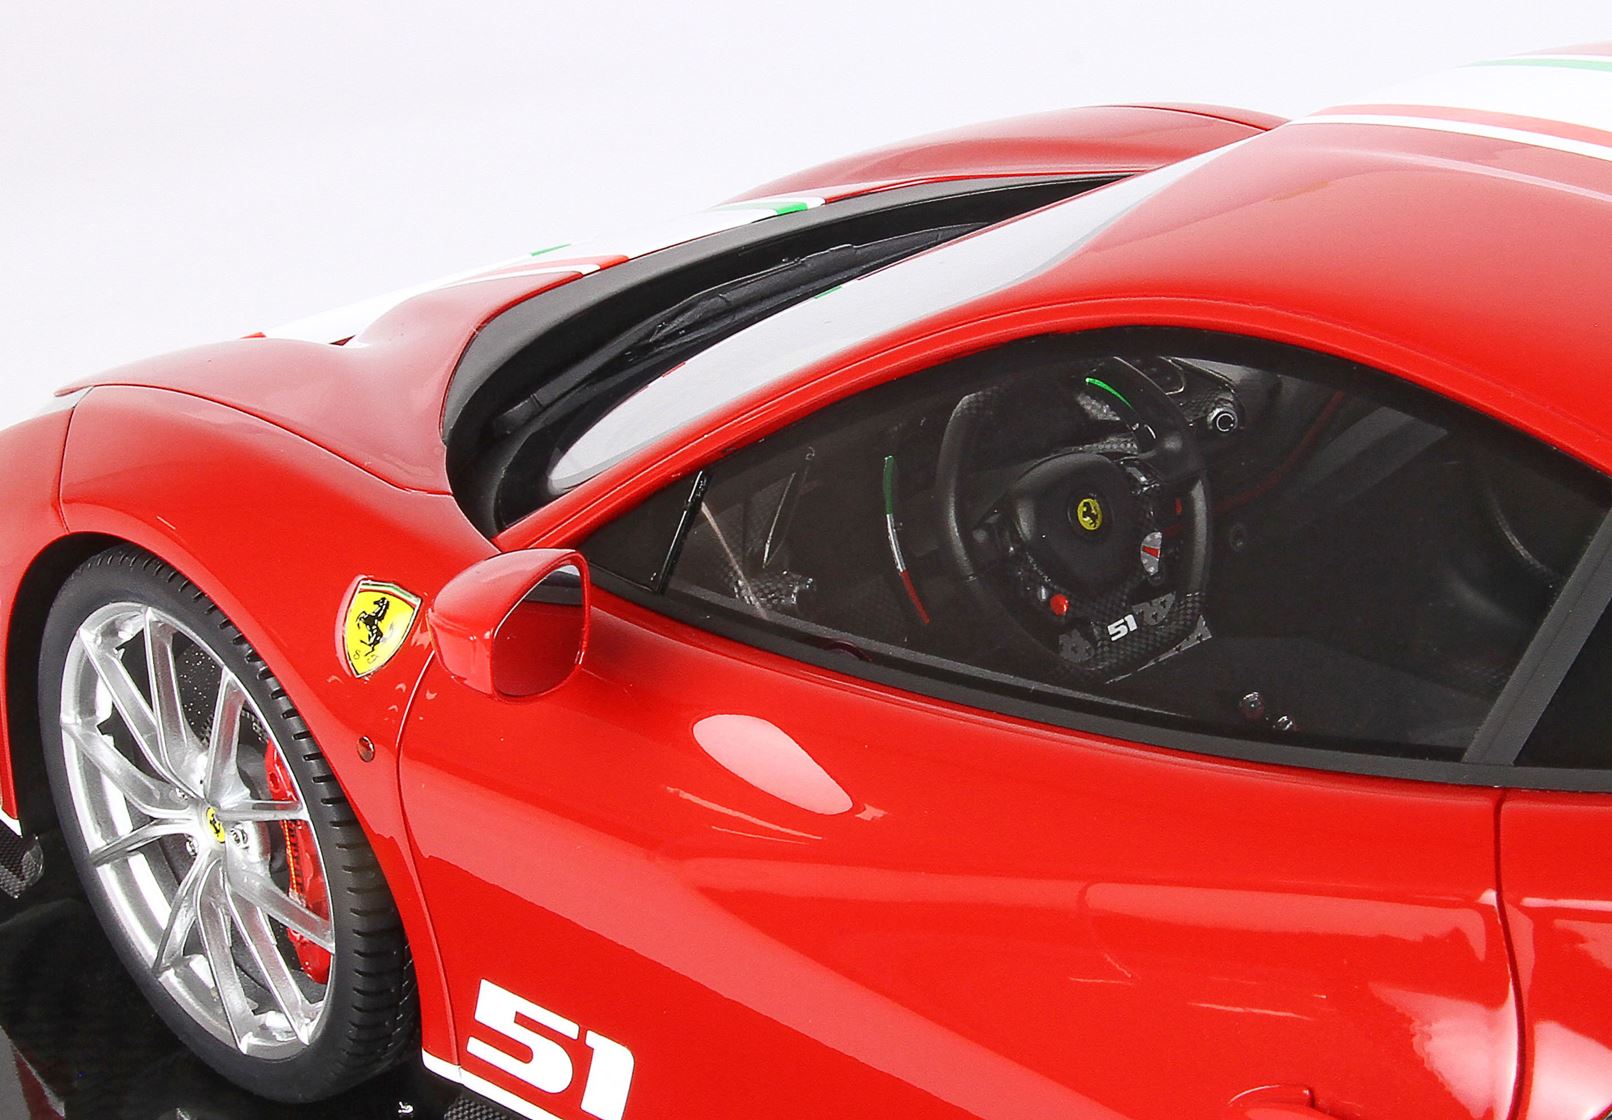 BBR Ferrari 488 Pista Piloti 1:12 scale